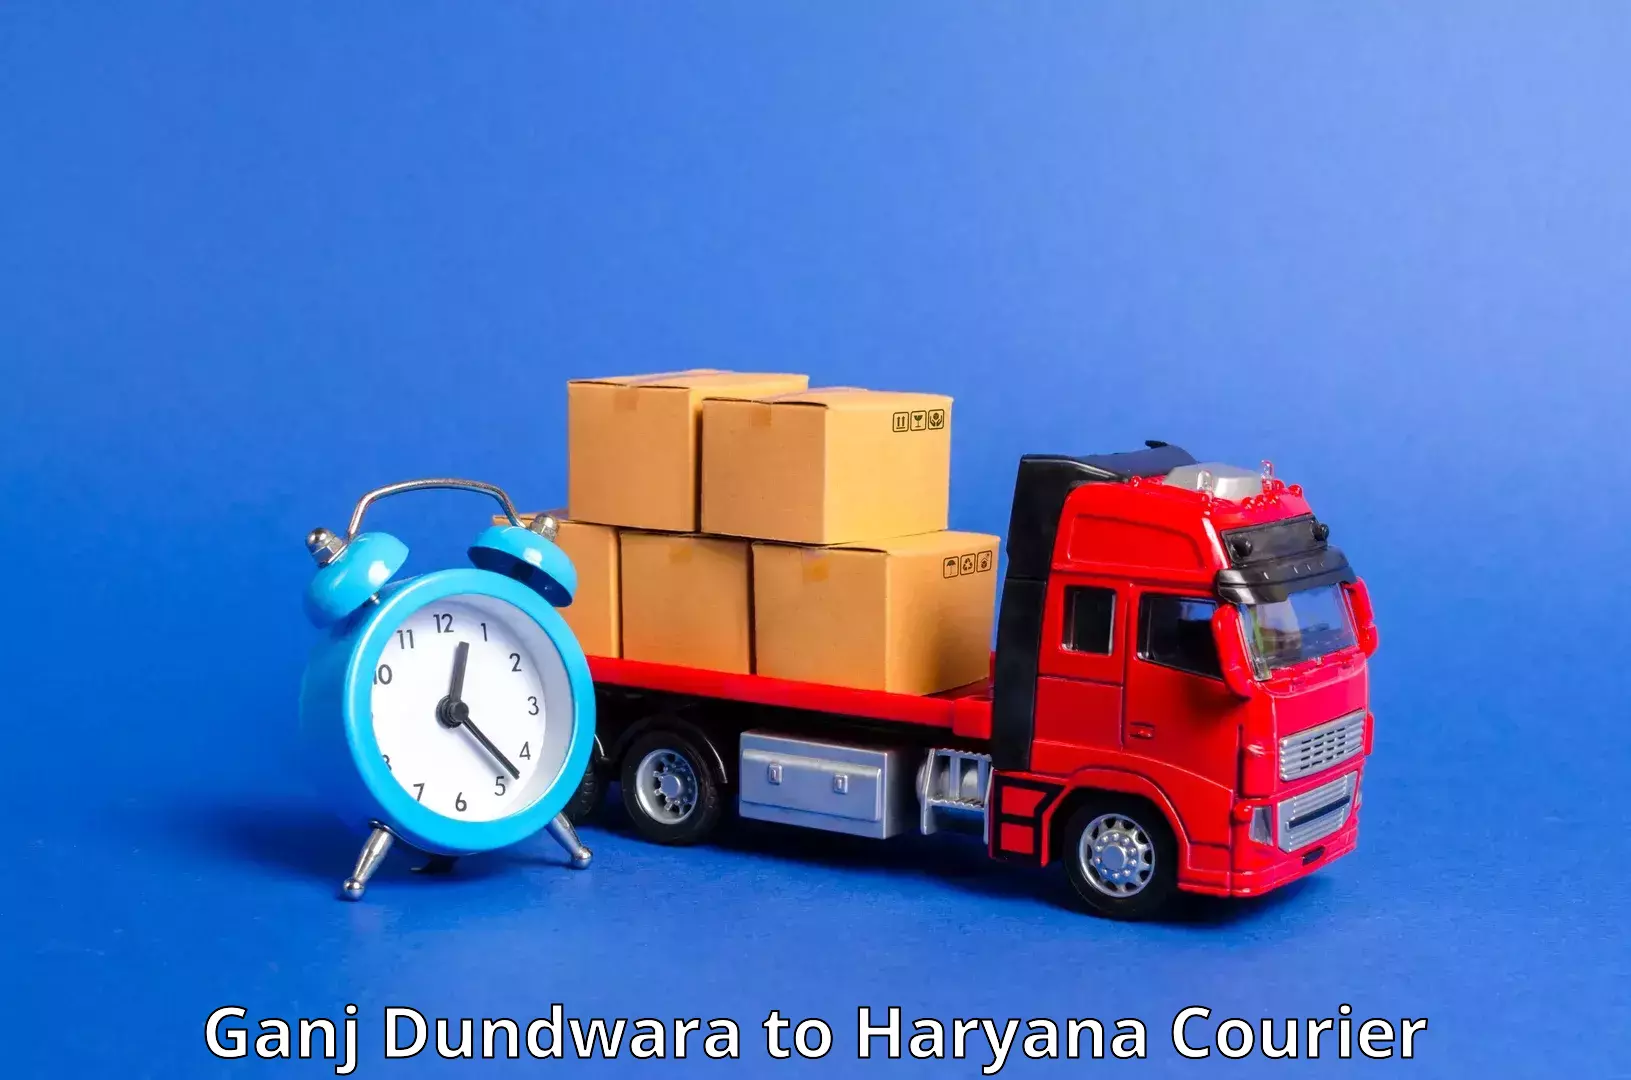 Bulk courier orders Ganj Dundwara to Kurukshetra